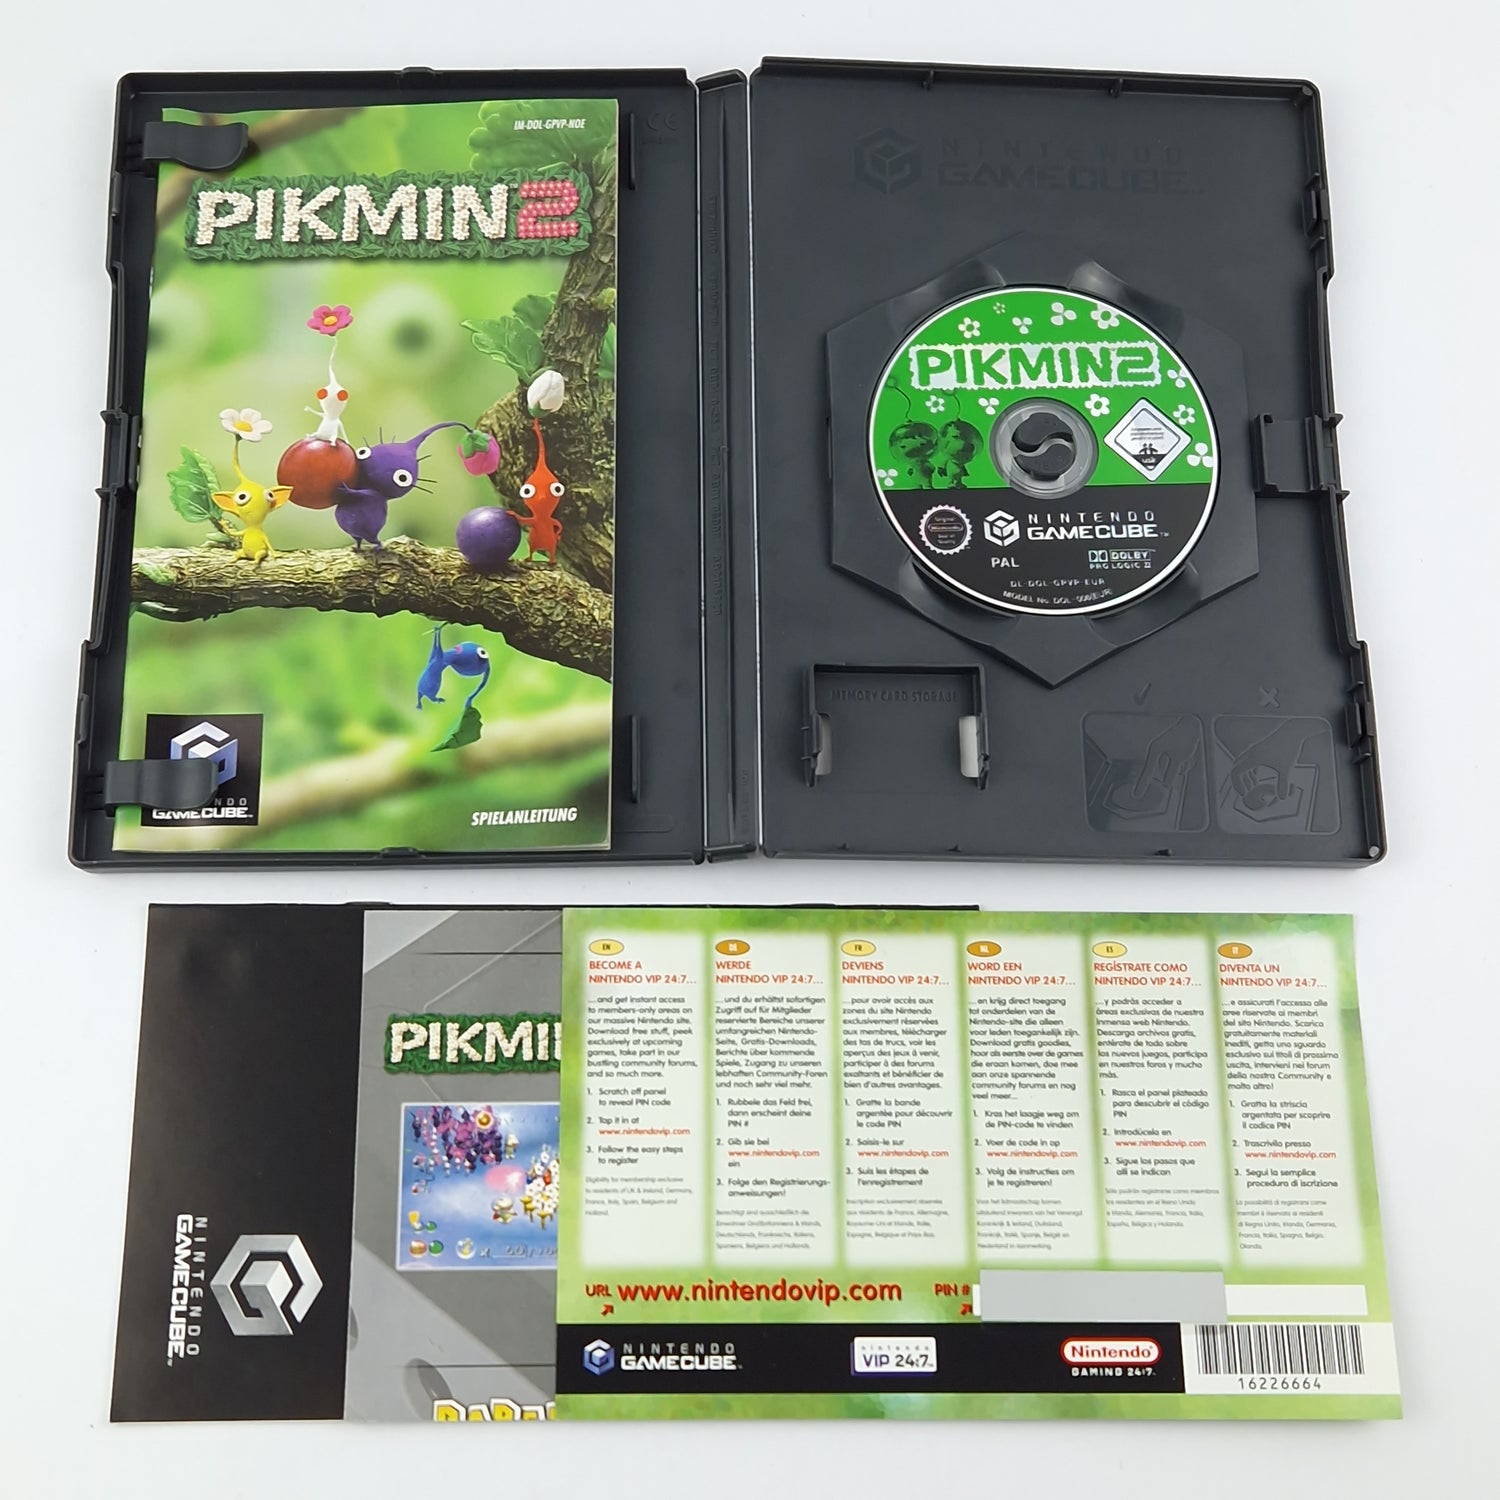 Nintendo Gamecube game: Pikmin 2 - CD instructions original packaging / very good